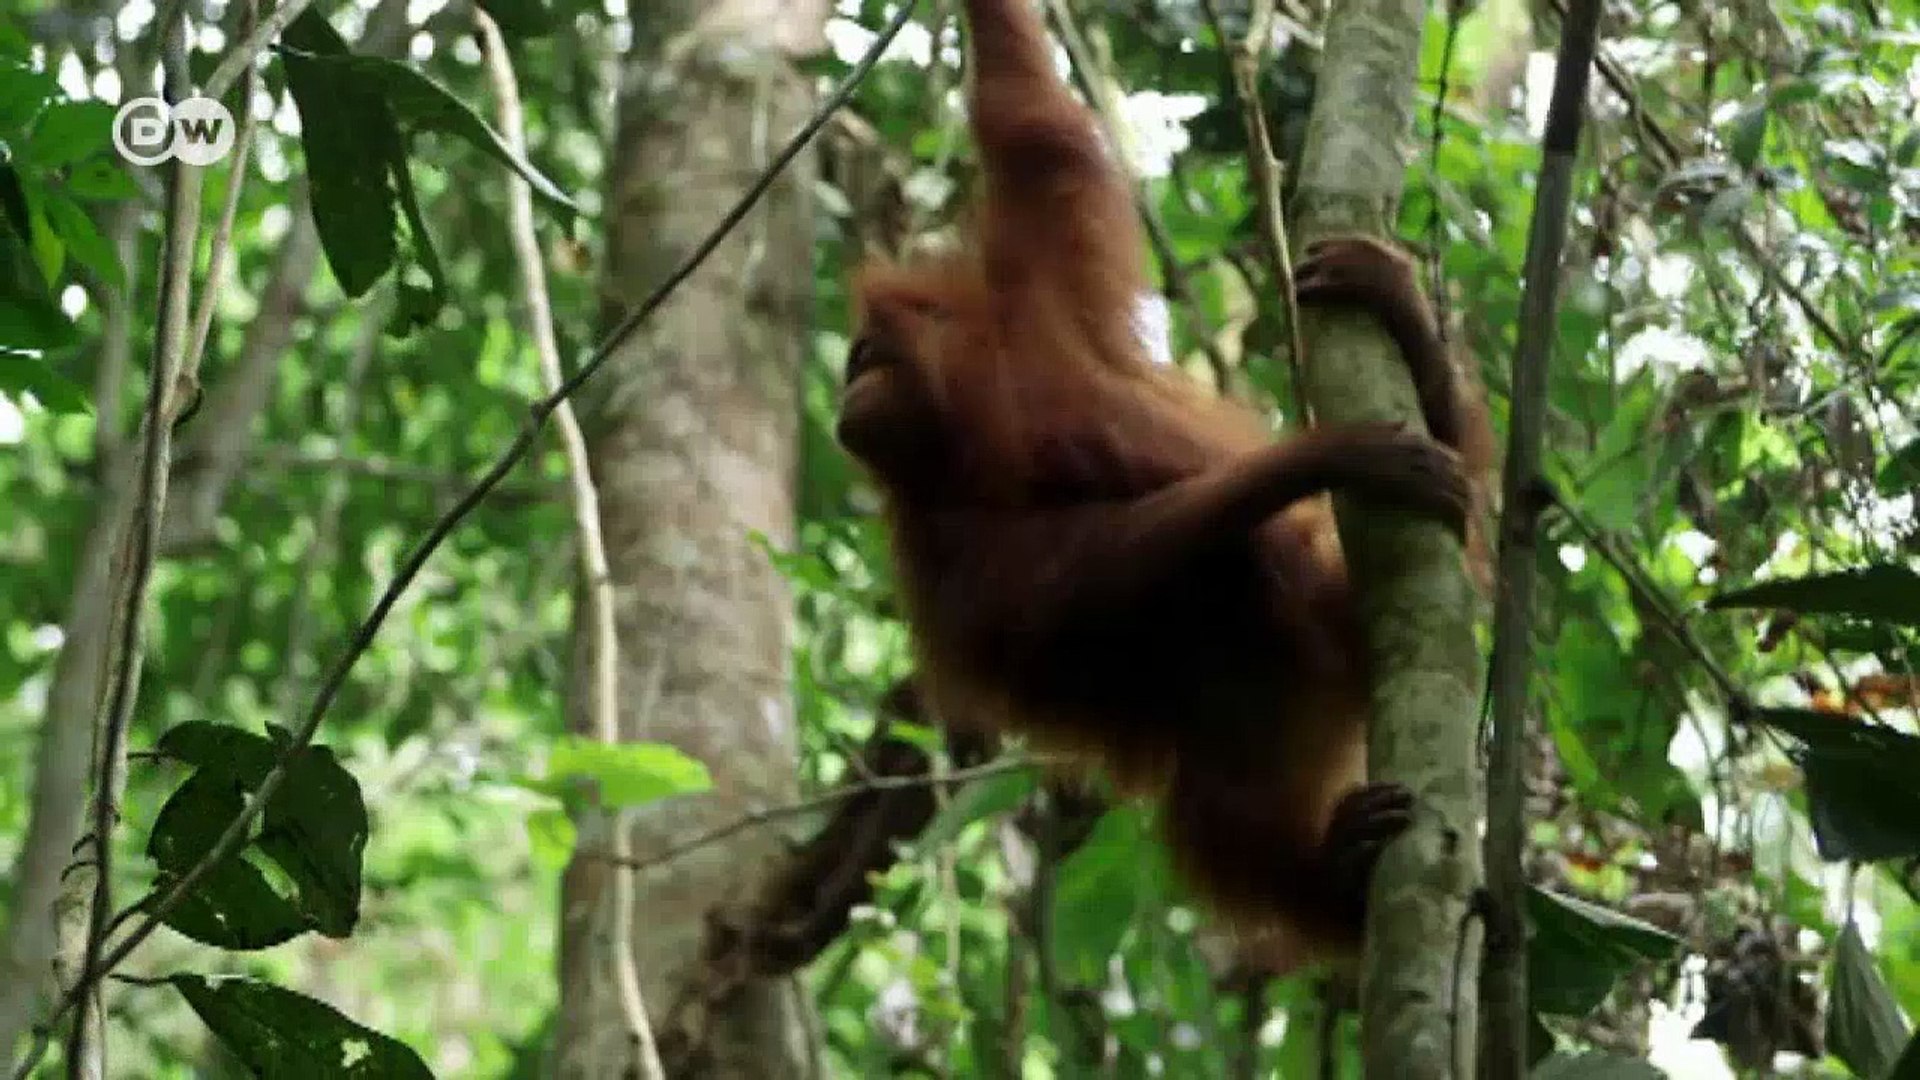 Saving the orangutans | Tomorrow Today